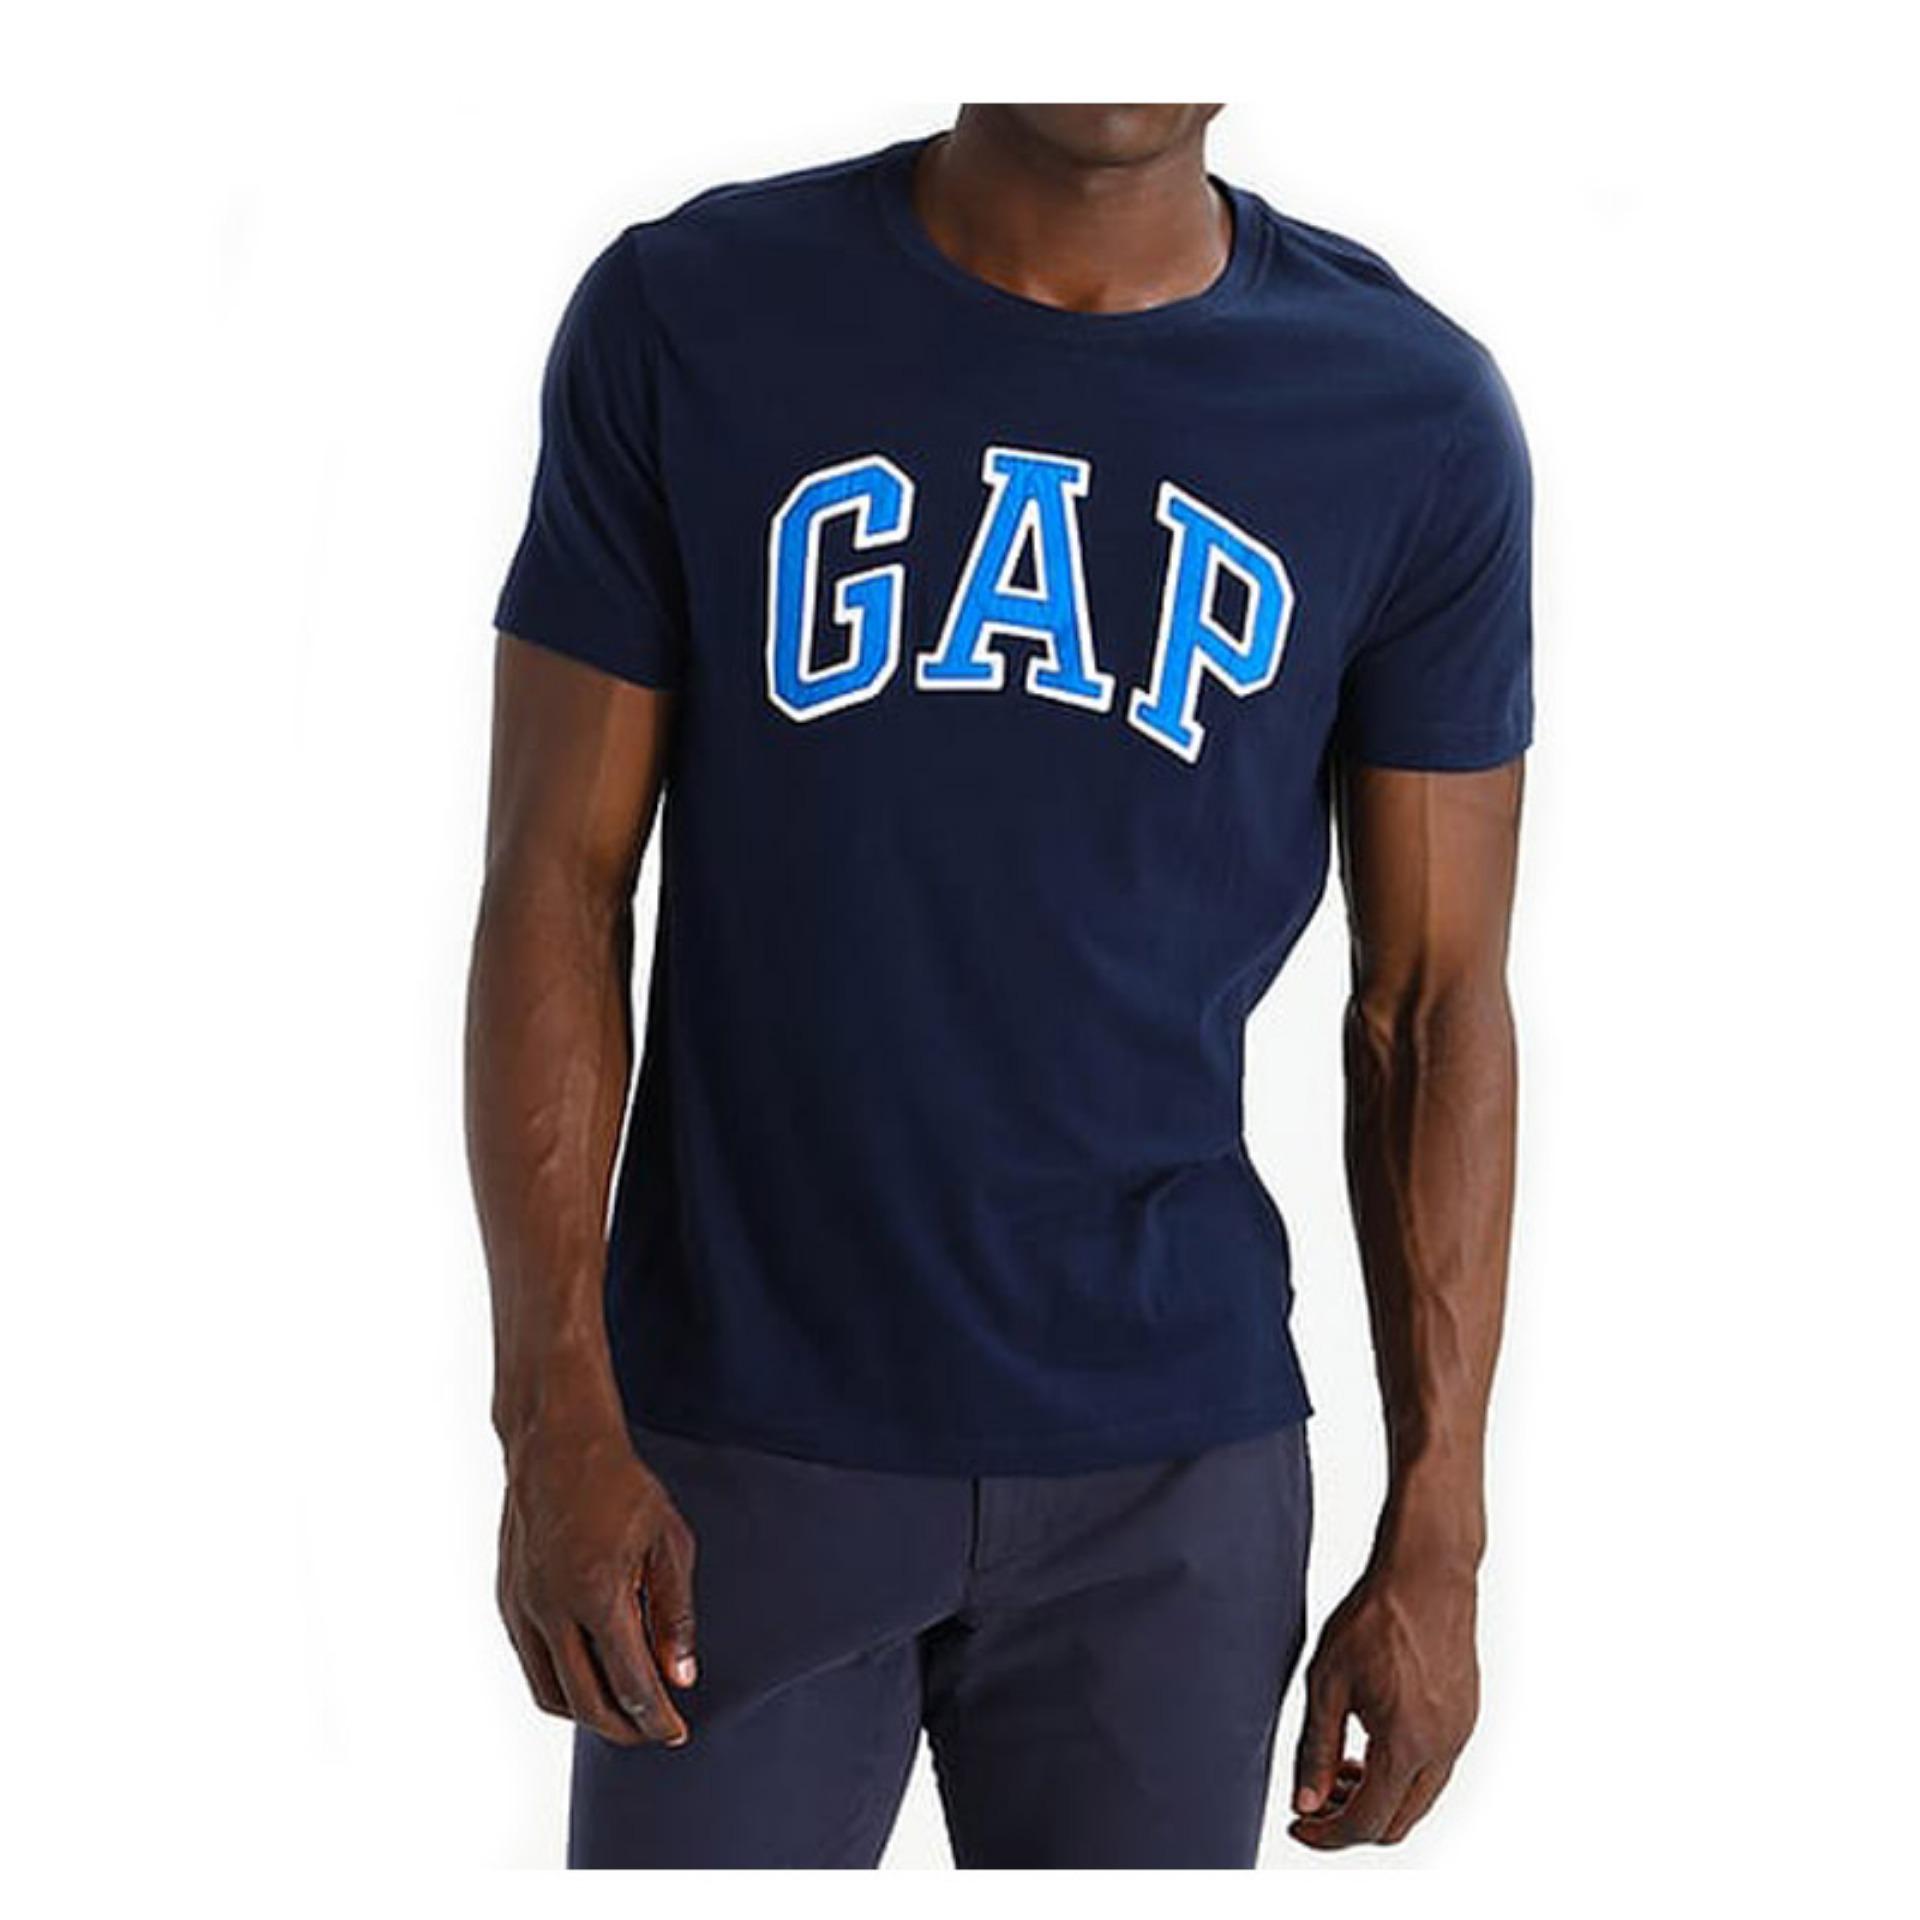 Gap Shirts Sale Philippines Rldm